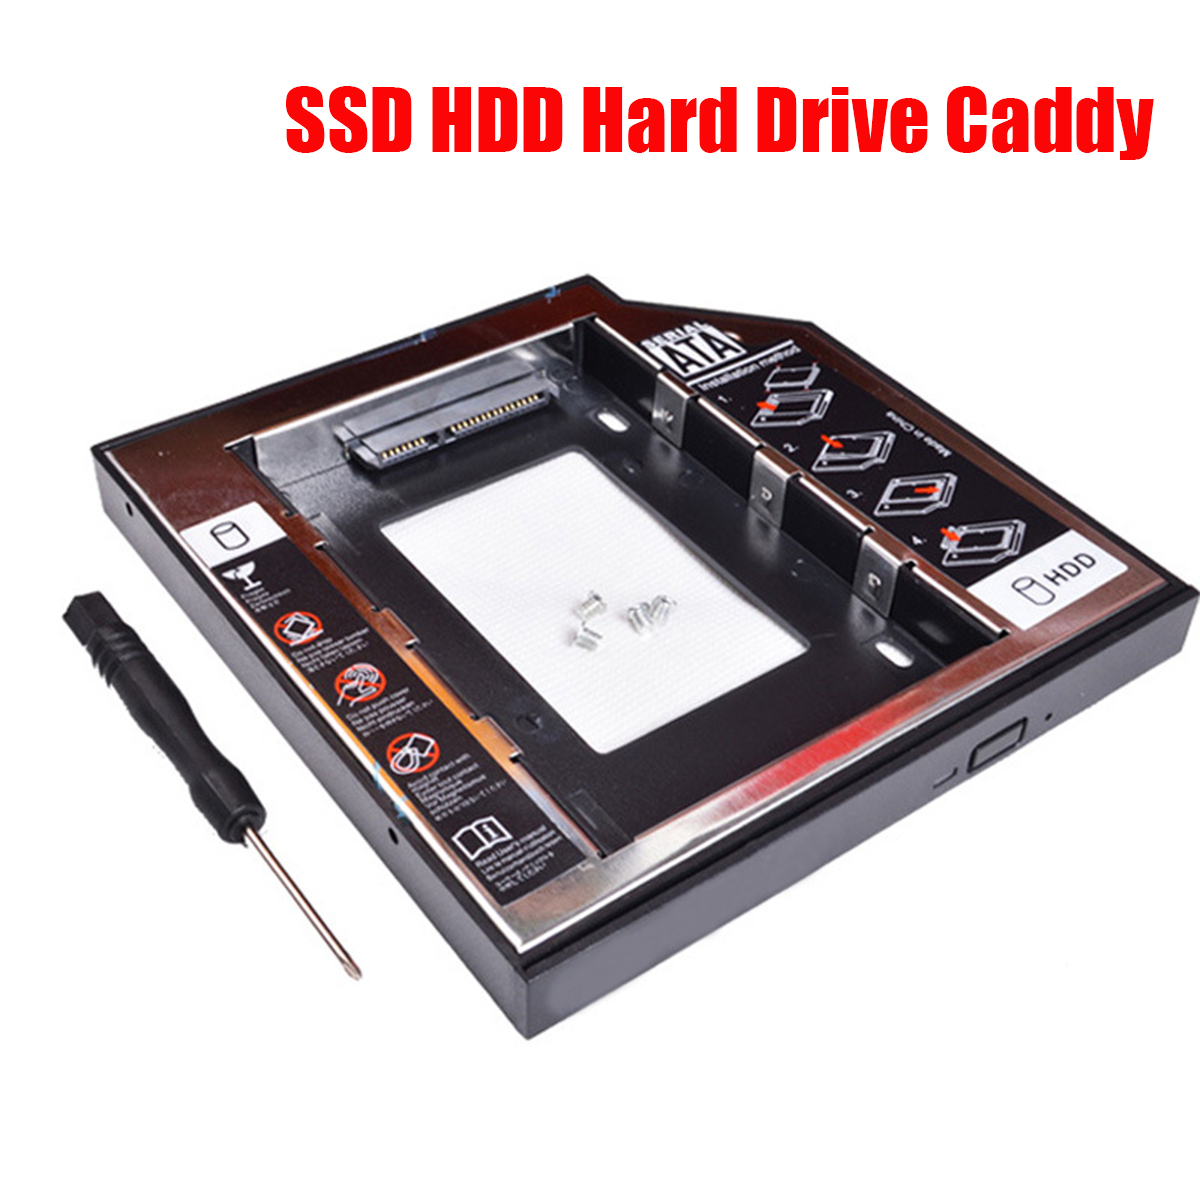 2nd HDD SSD Hard Drive Caddy for IBM Lenovo Thinkpad T430 T430i W530 T530 T530i 60